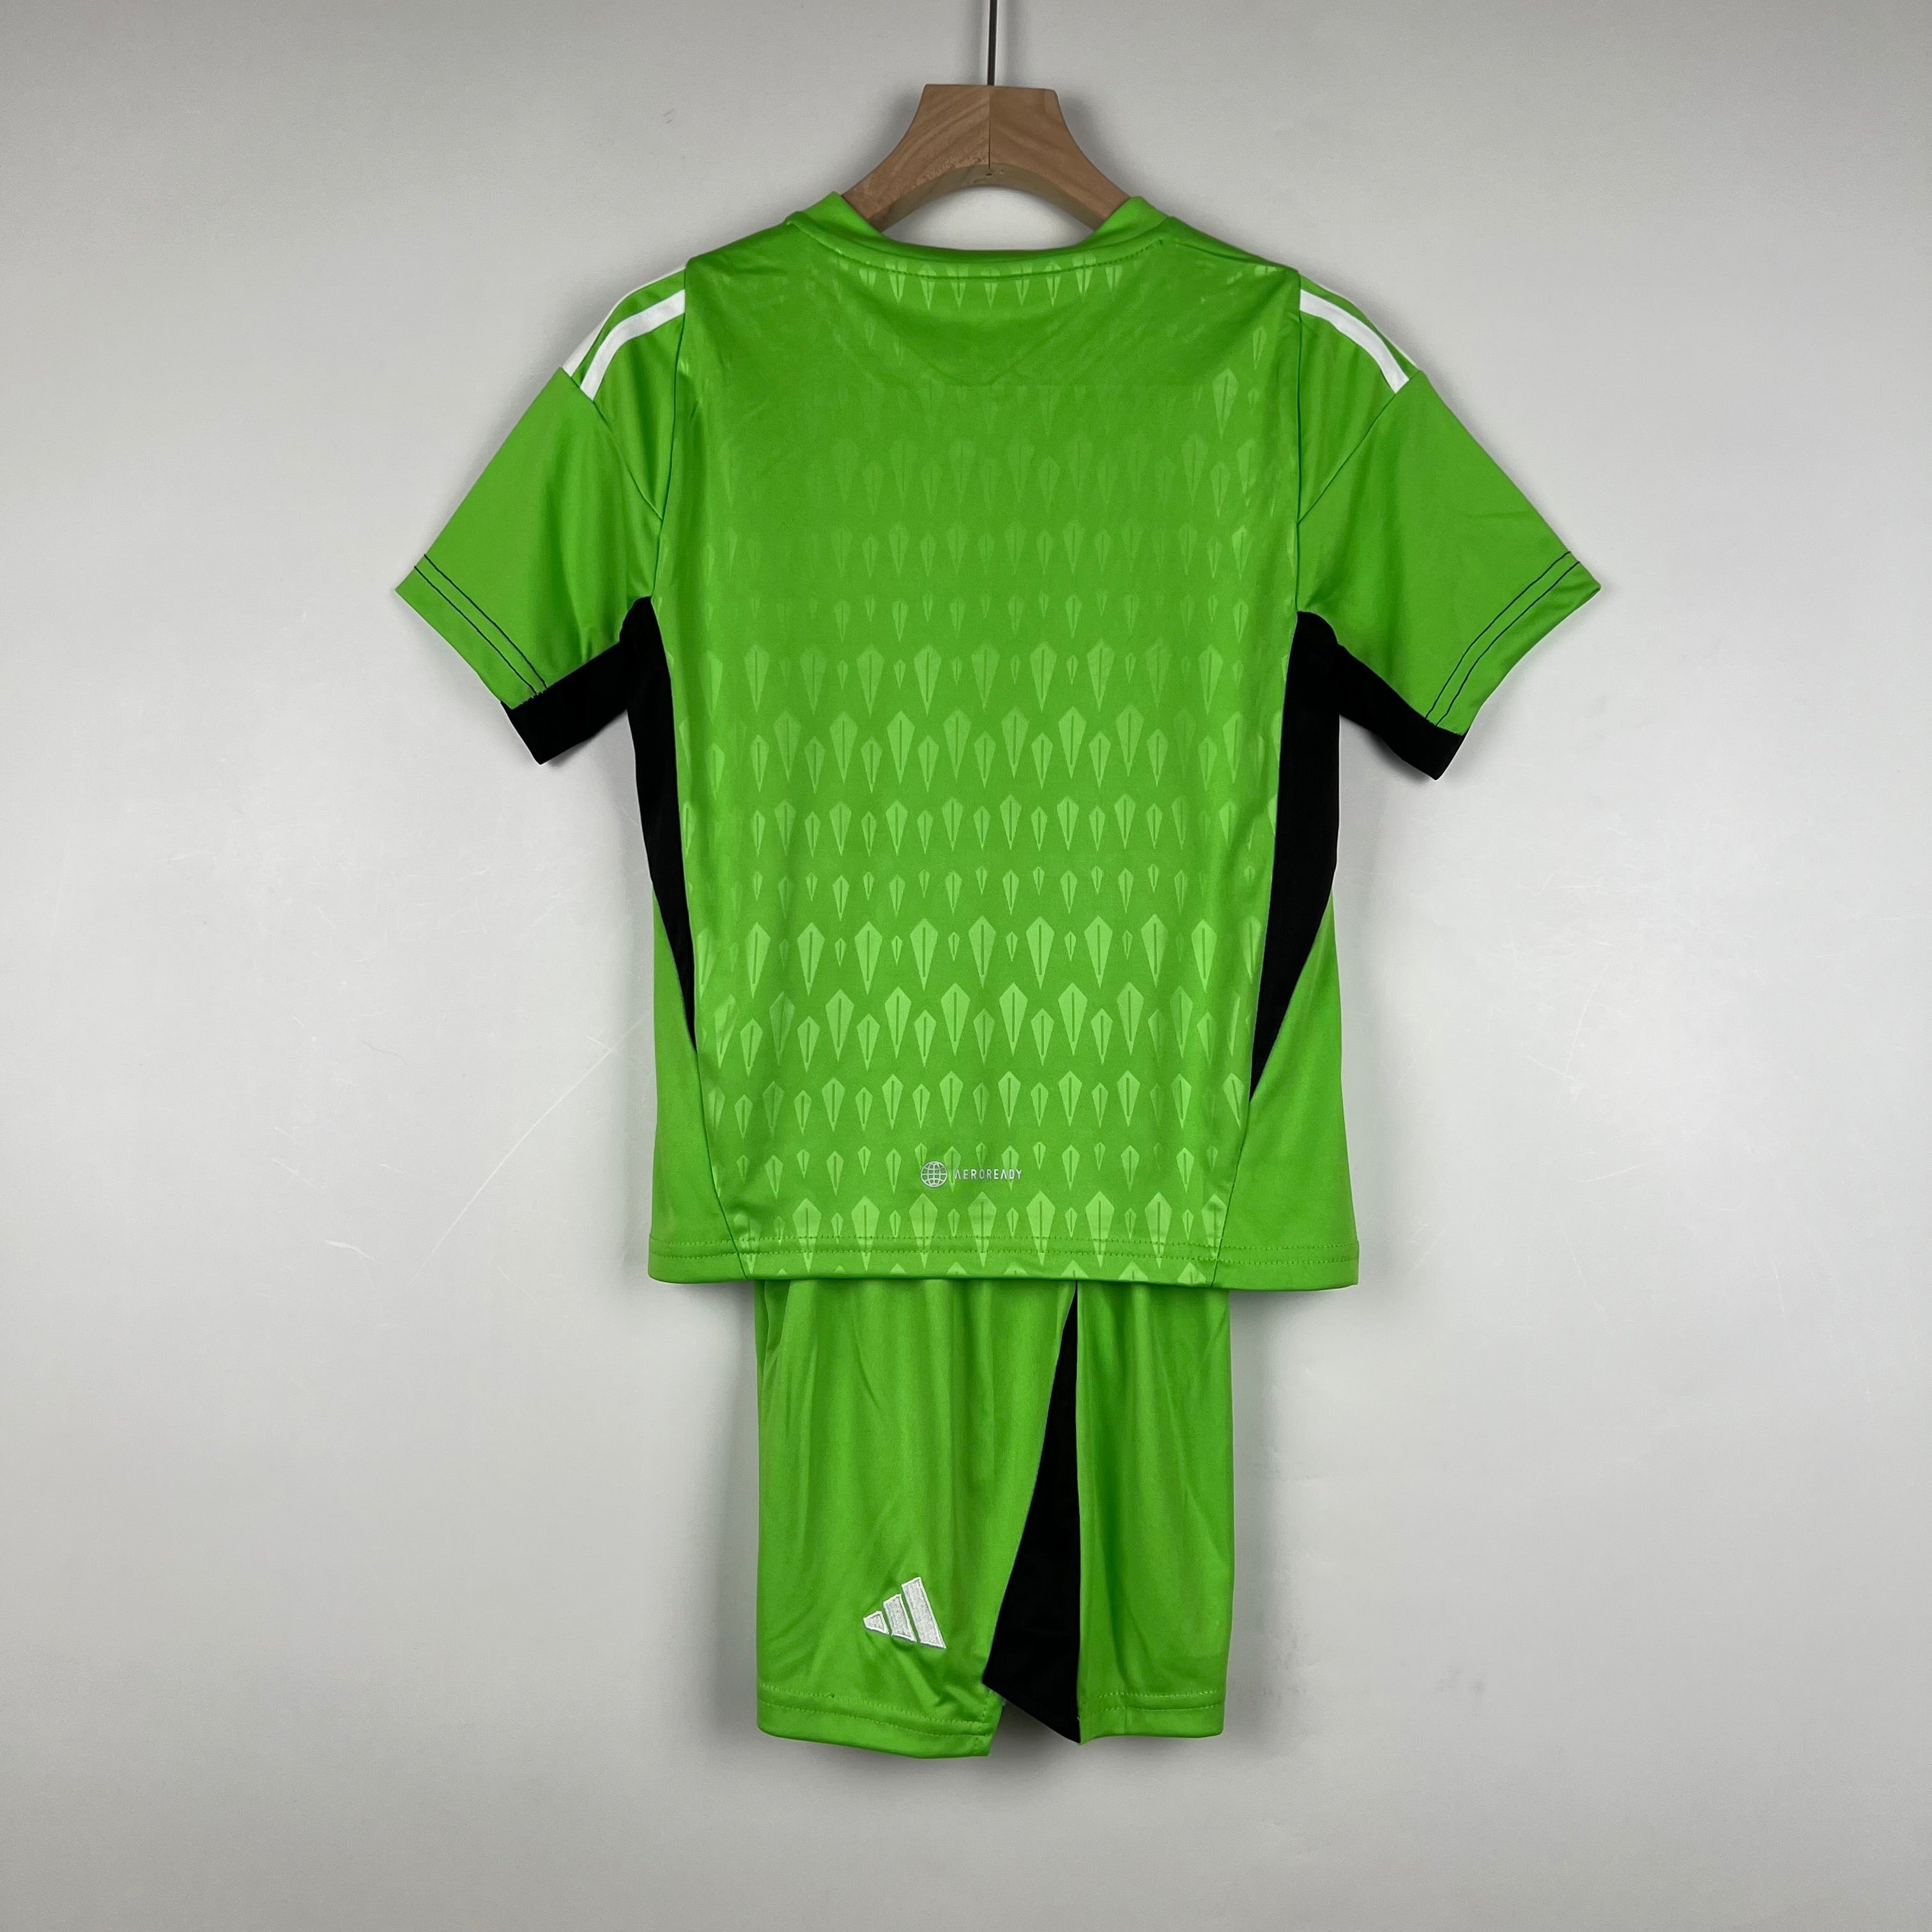 Real Madrid Green Goalkeeper kid kit size